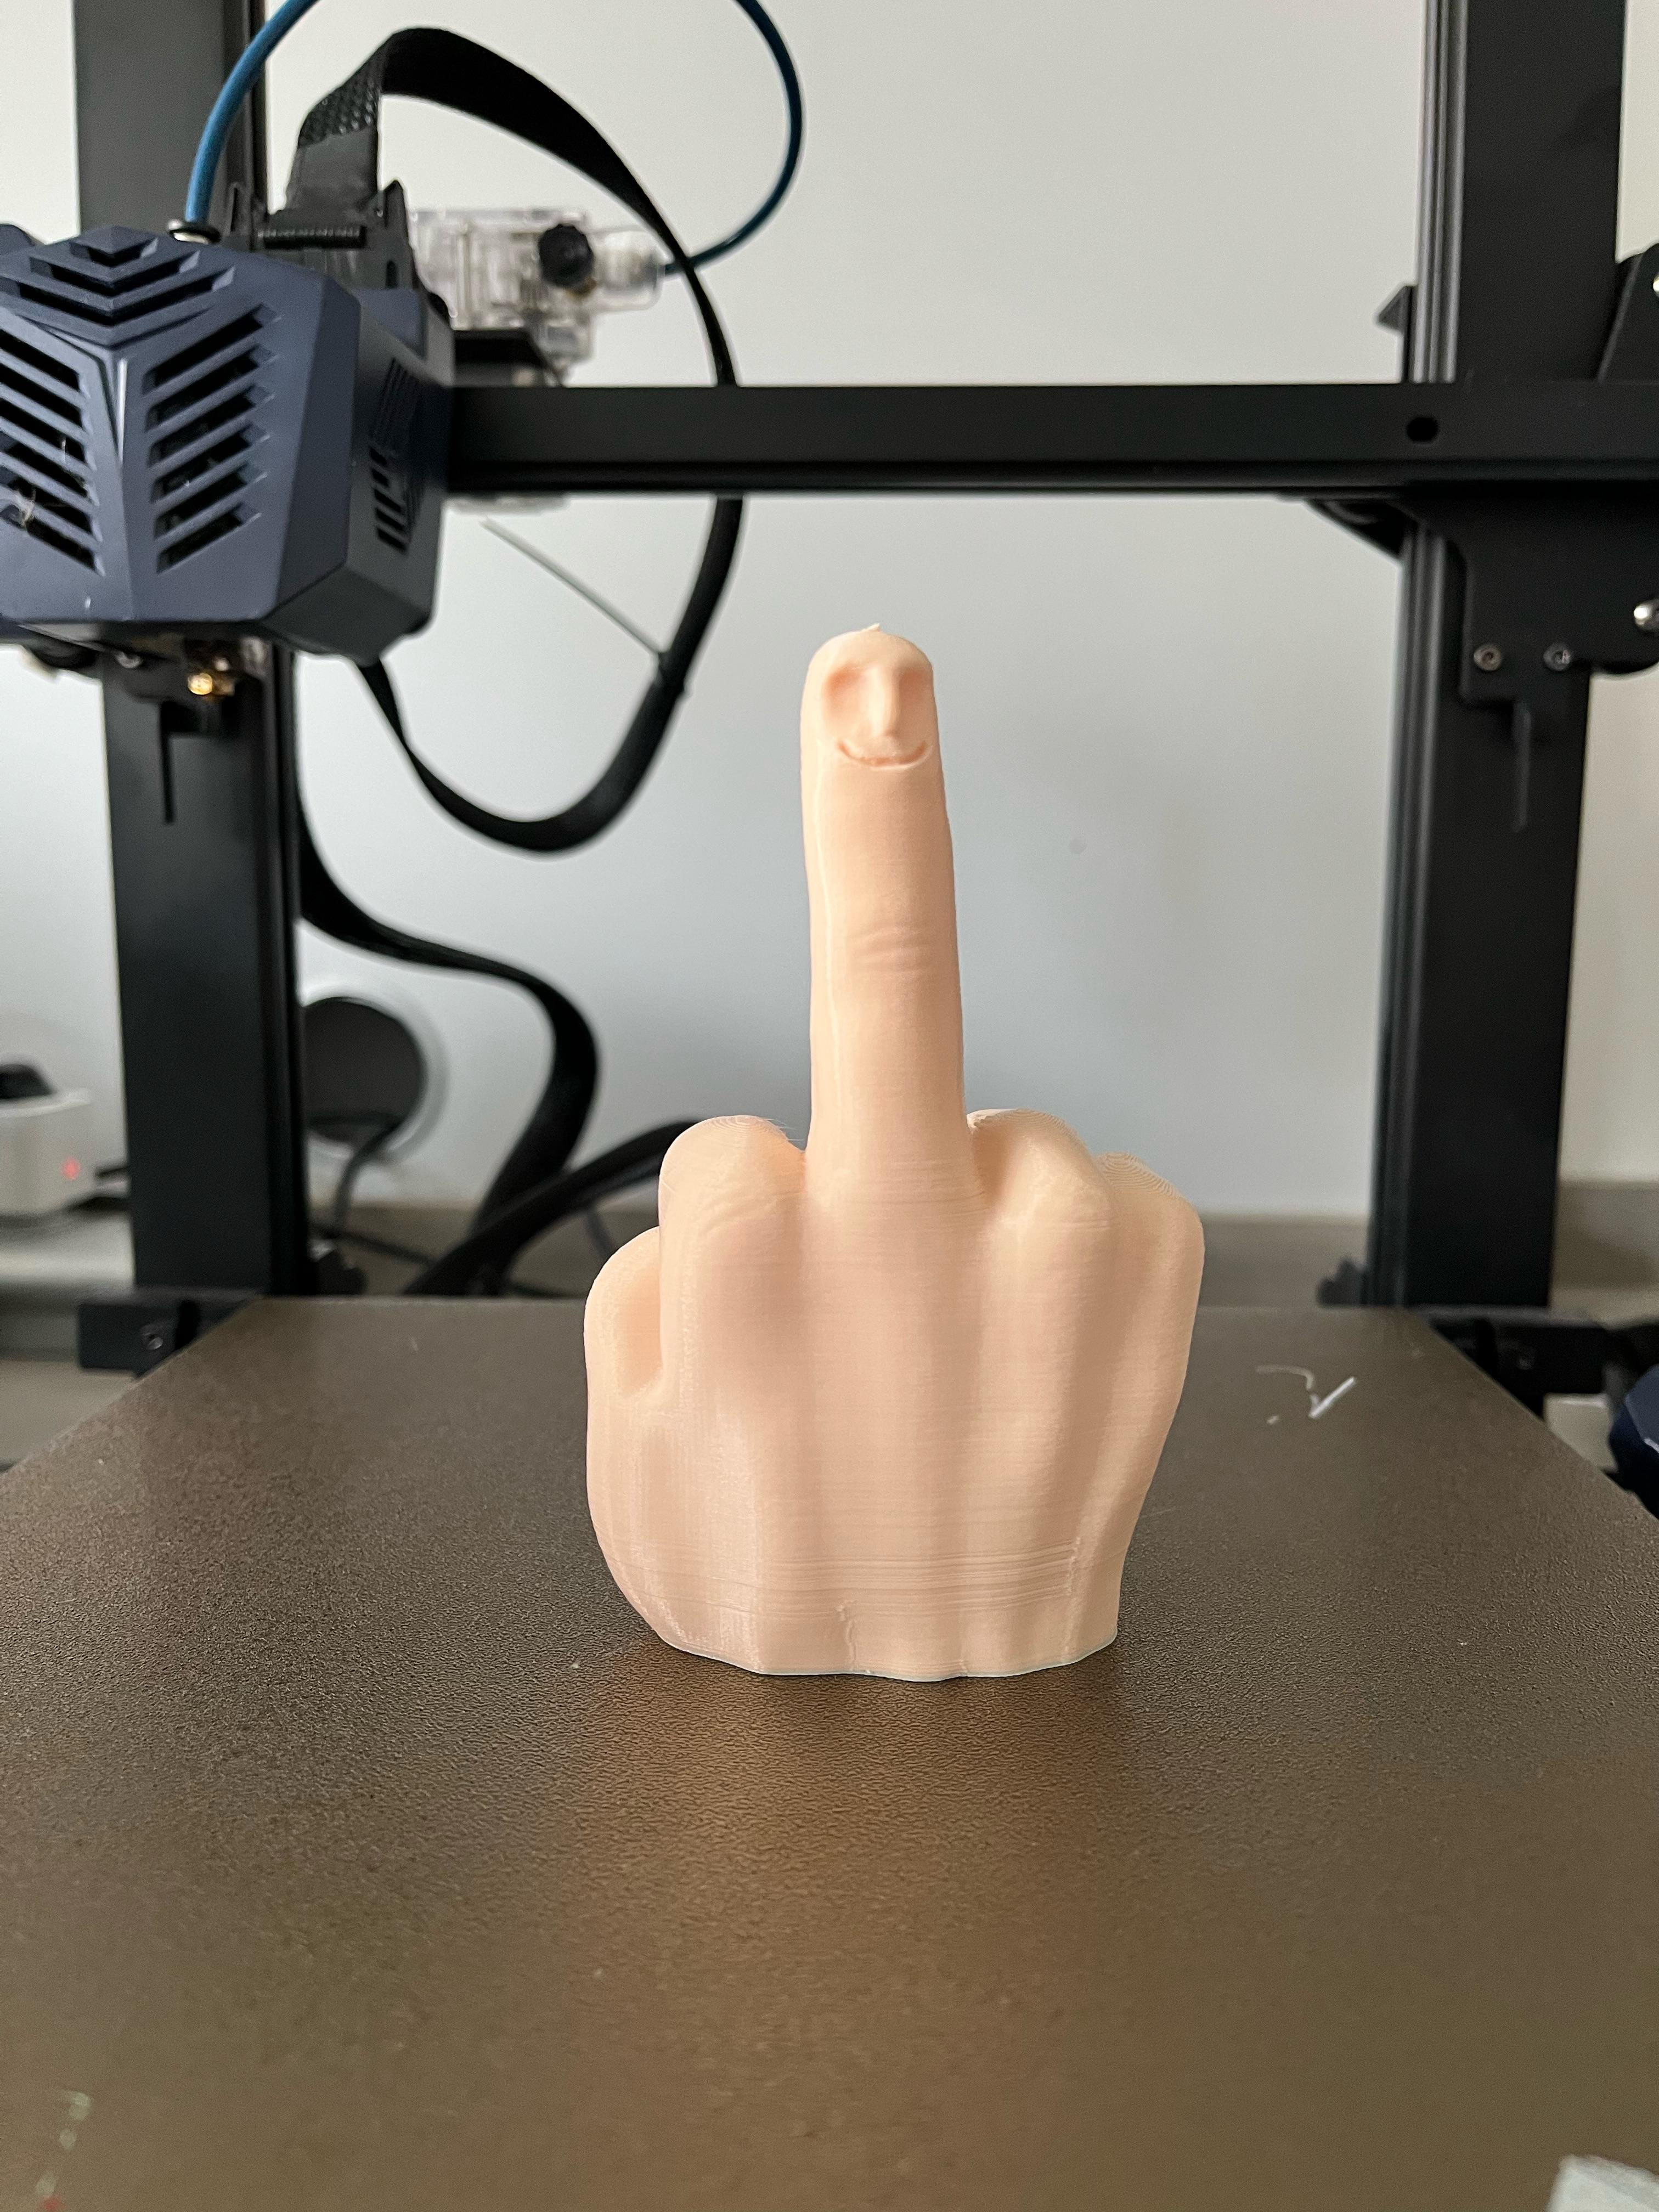 STL file MIDDLE FINGER FROG FIGURINE - NO SUPPORTS 🐸・3D print